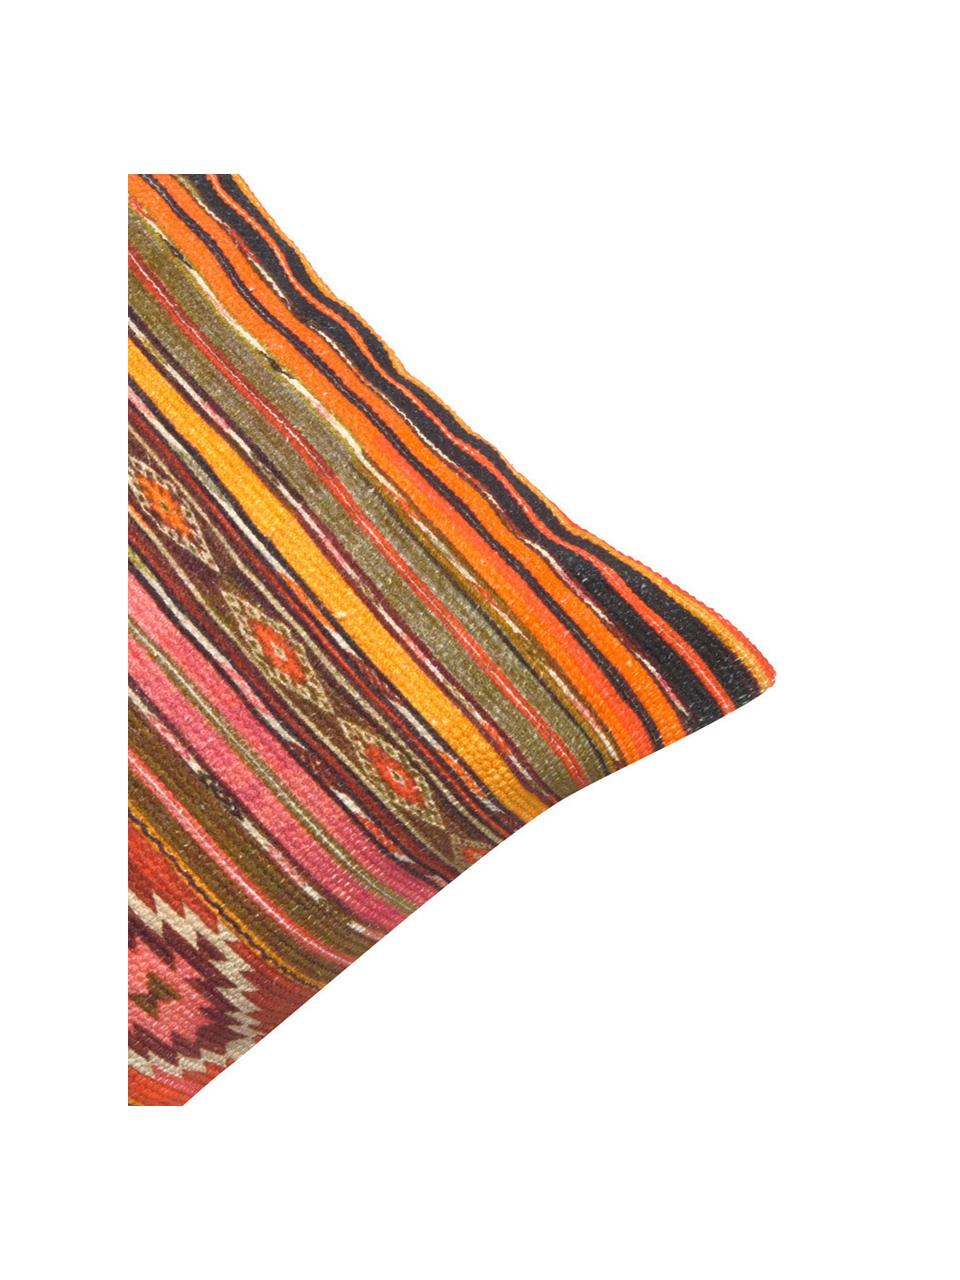 Kissenhülle Kusa mit Ethnomuster, 100% Baumwolle, Mehrfarbig, 45 x 45 cm